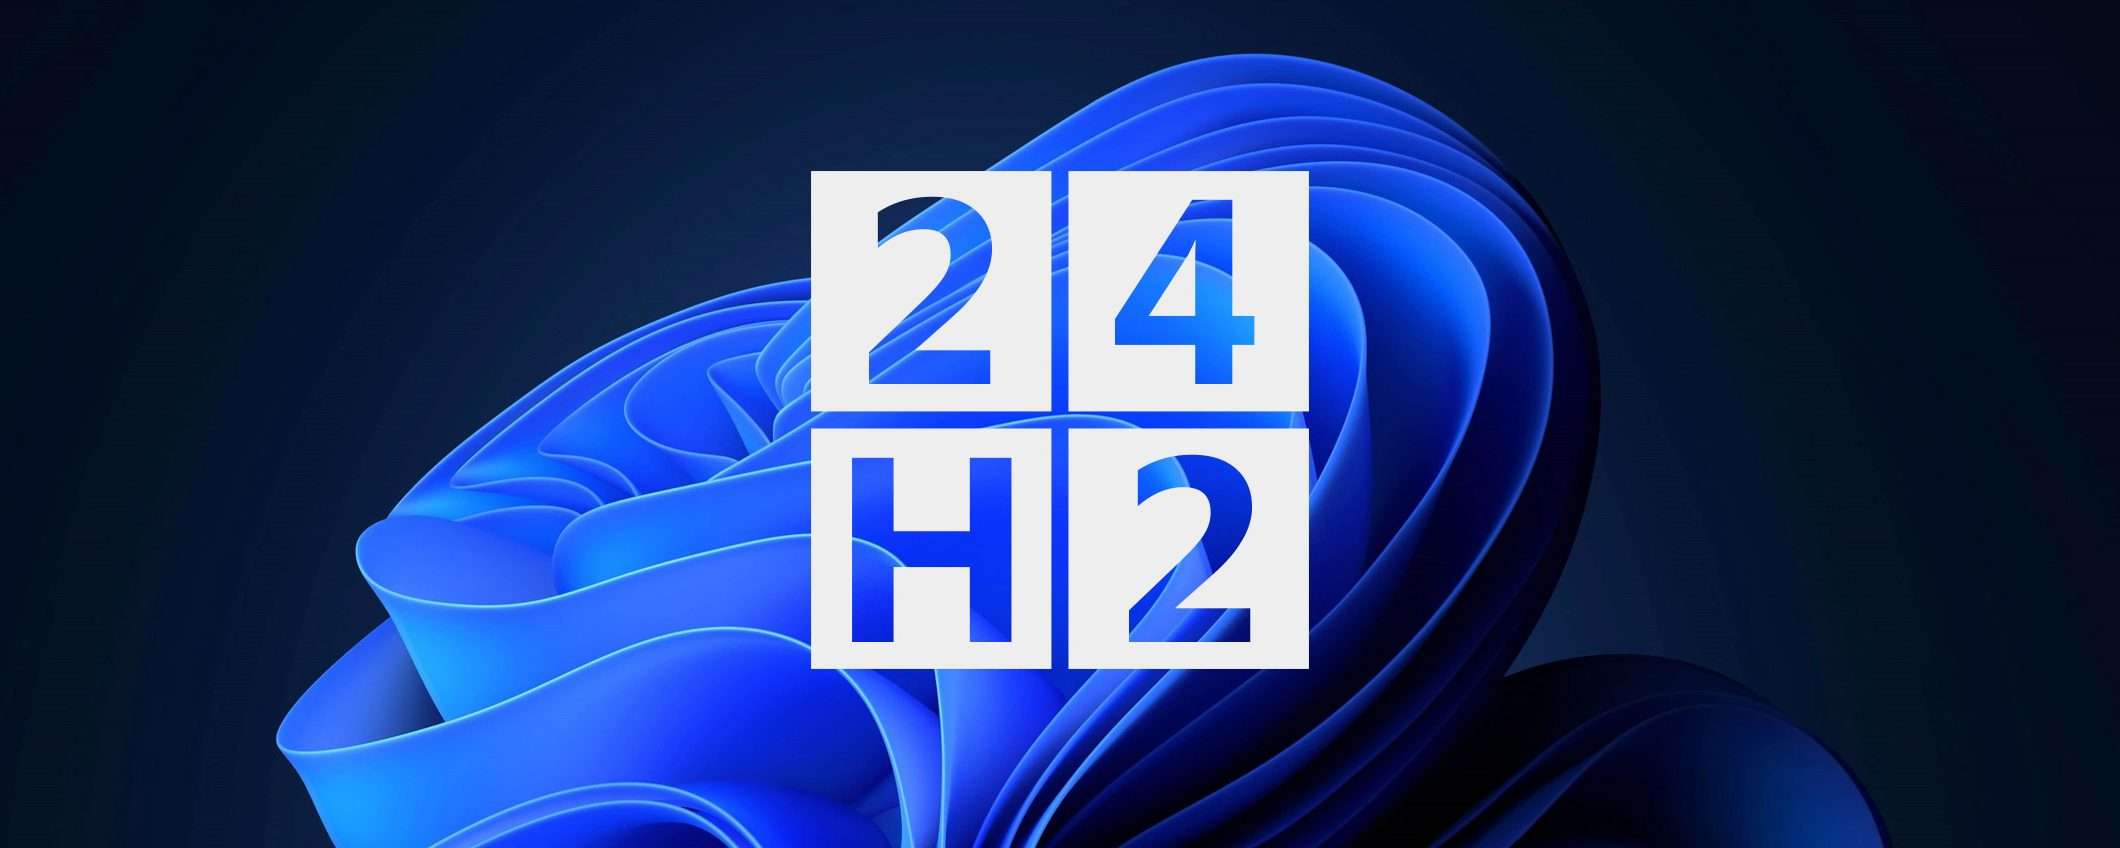 Windows 11 24H2: nuovi dettagli su AI Explorer